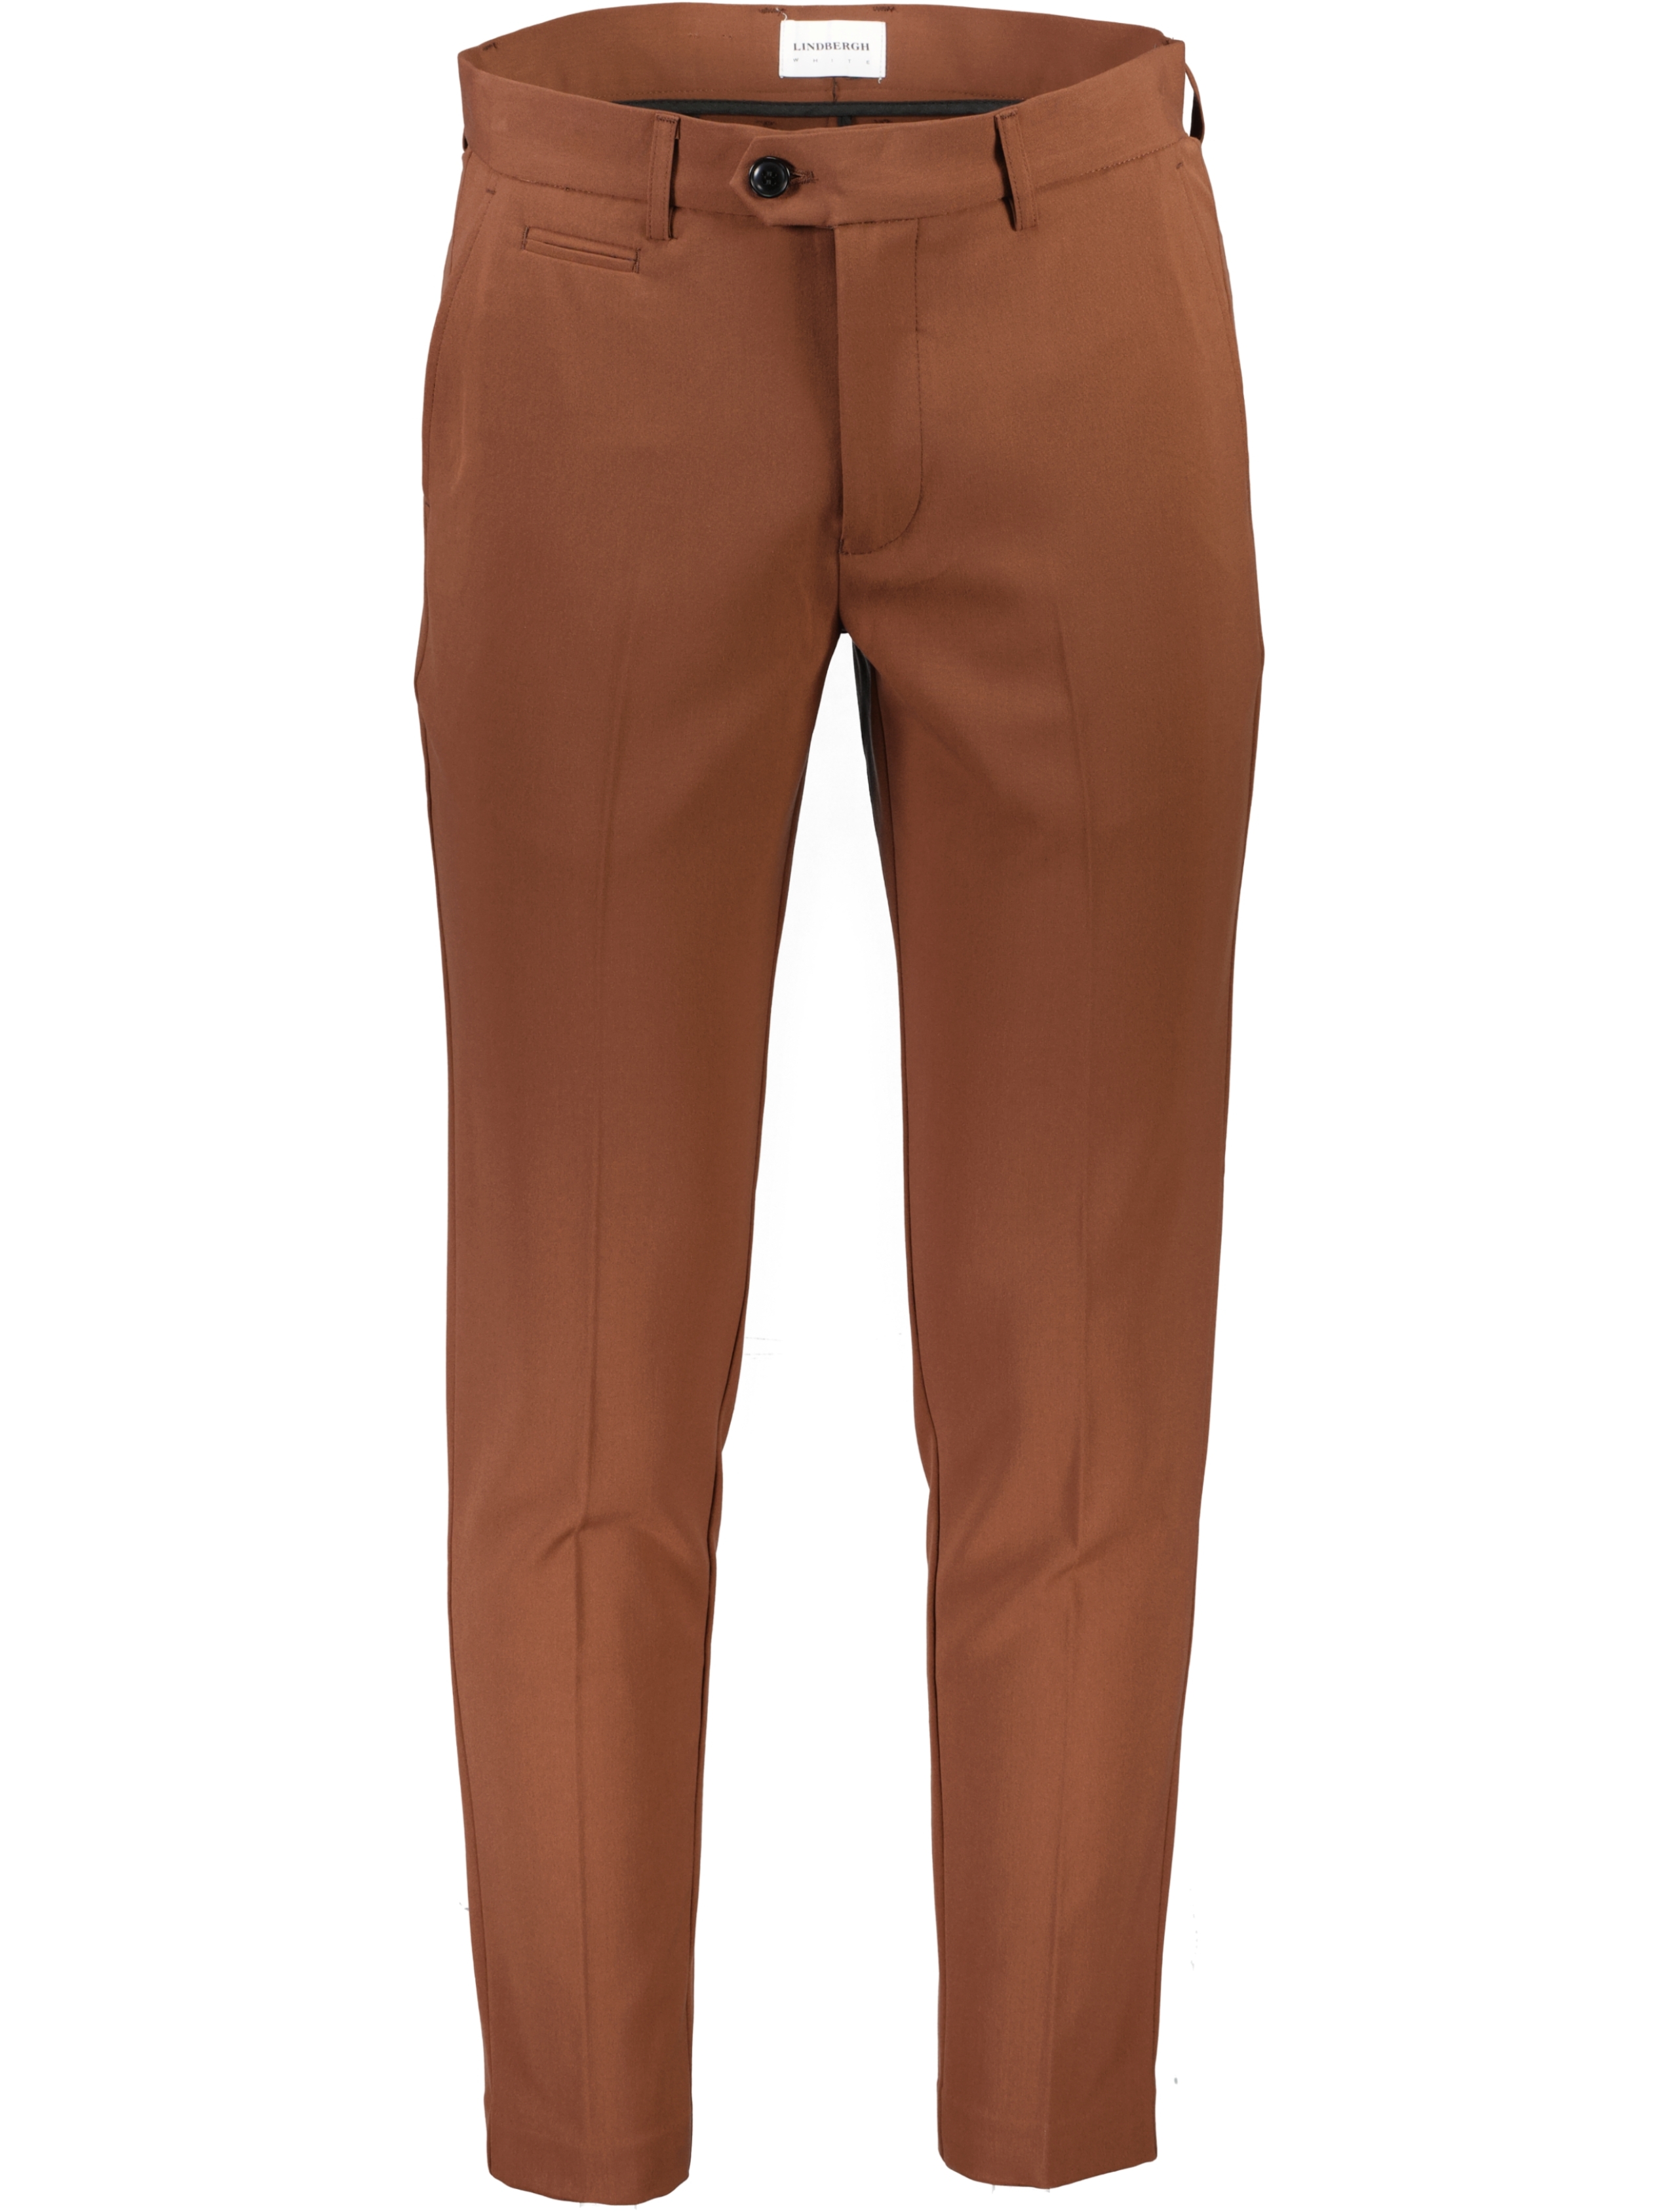 Lindbergh Performance pants brun / hazel brown